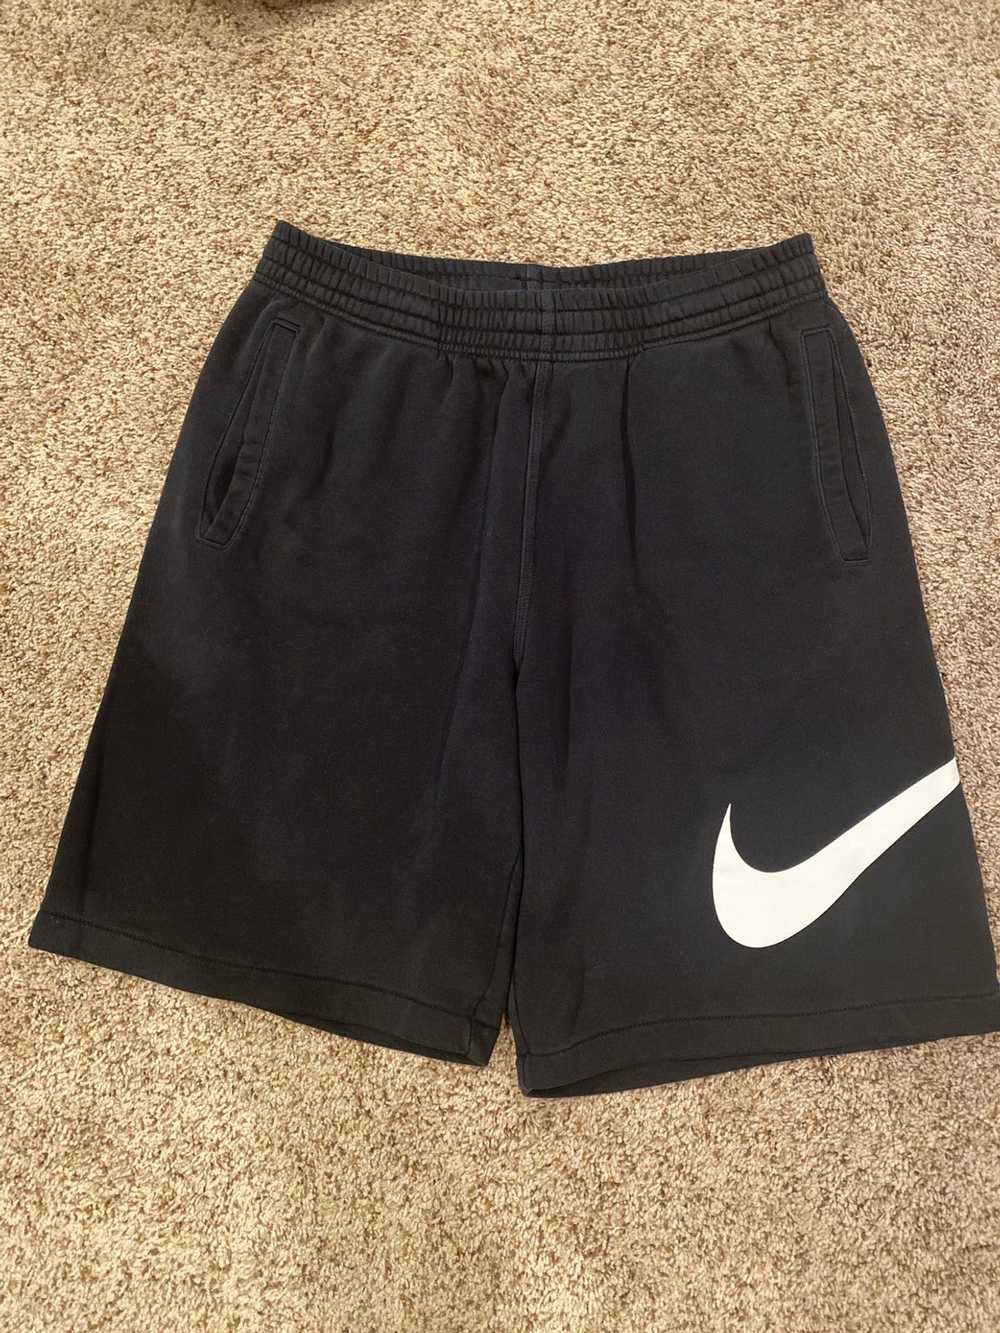 Nike Black Nike Fleece Shorts Lg - image 1